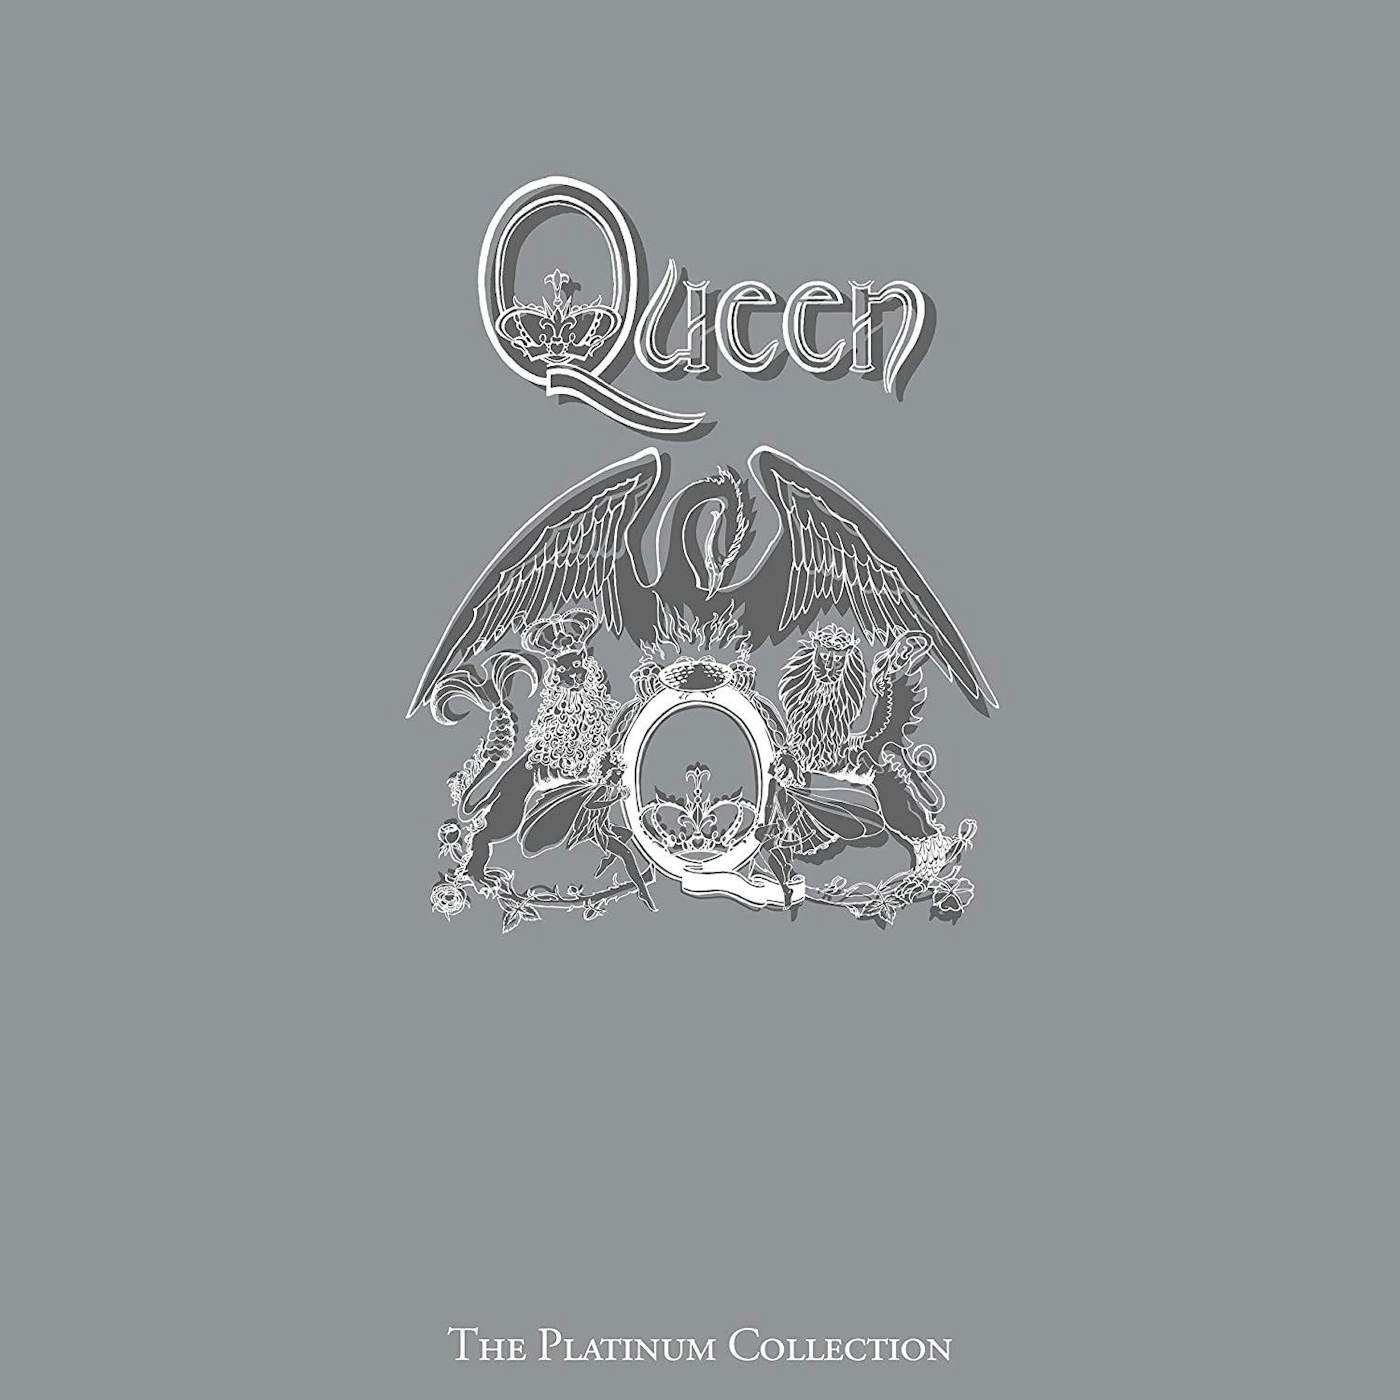 My Queen Album Cover Template